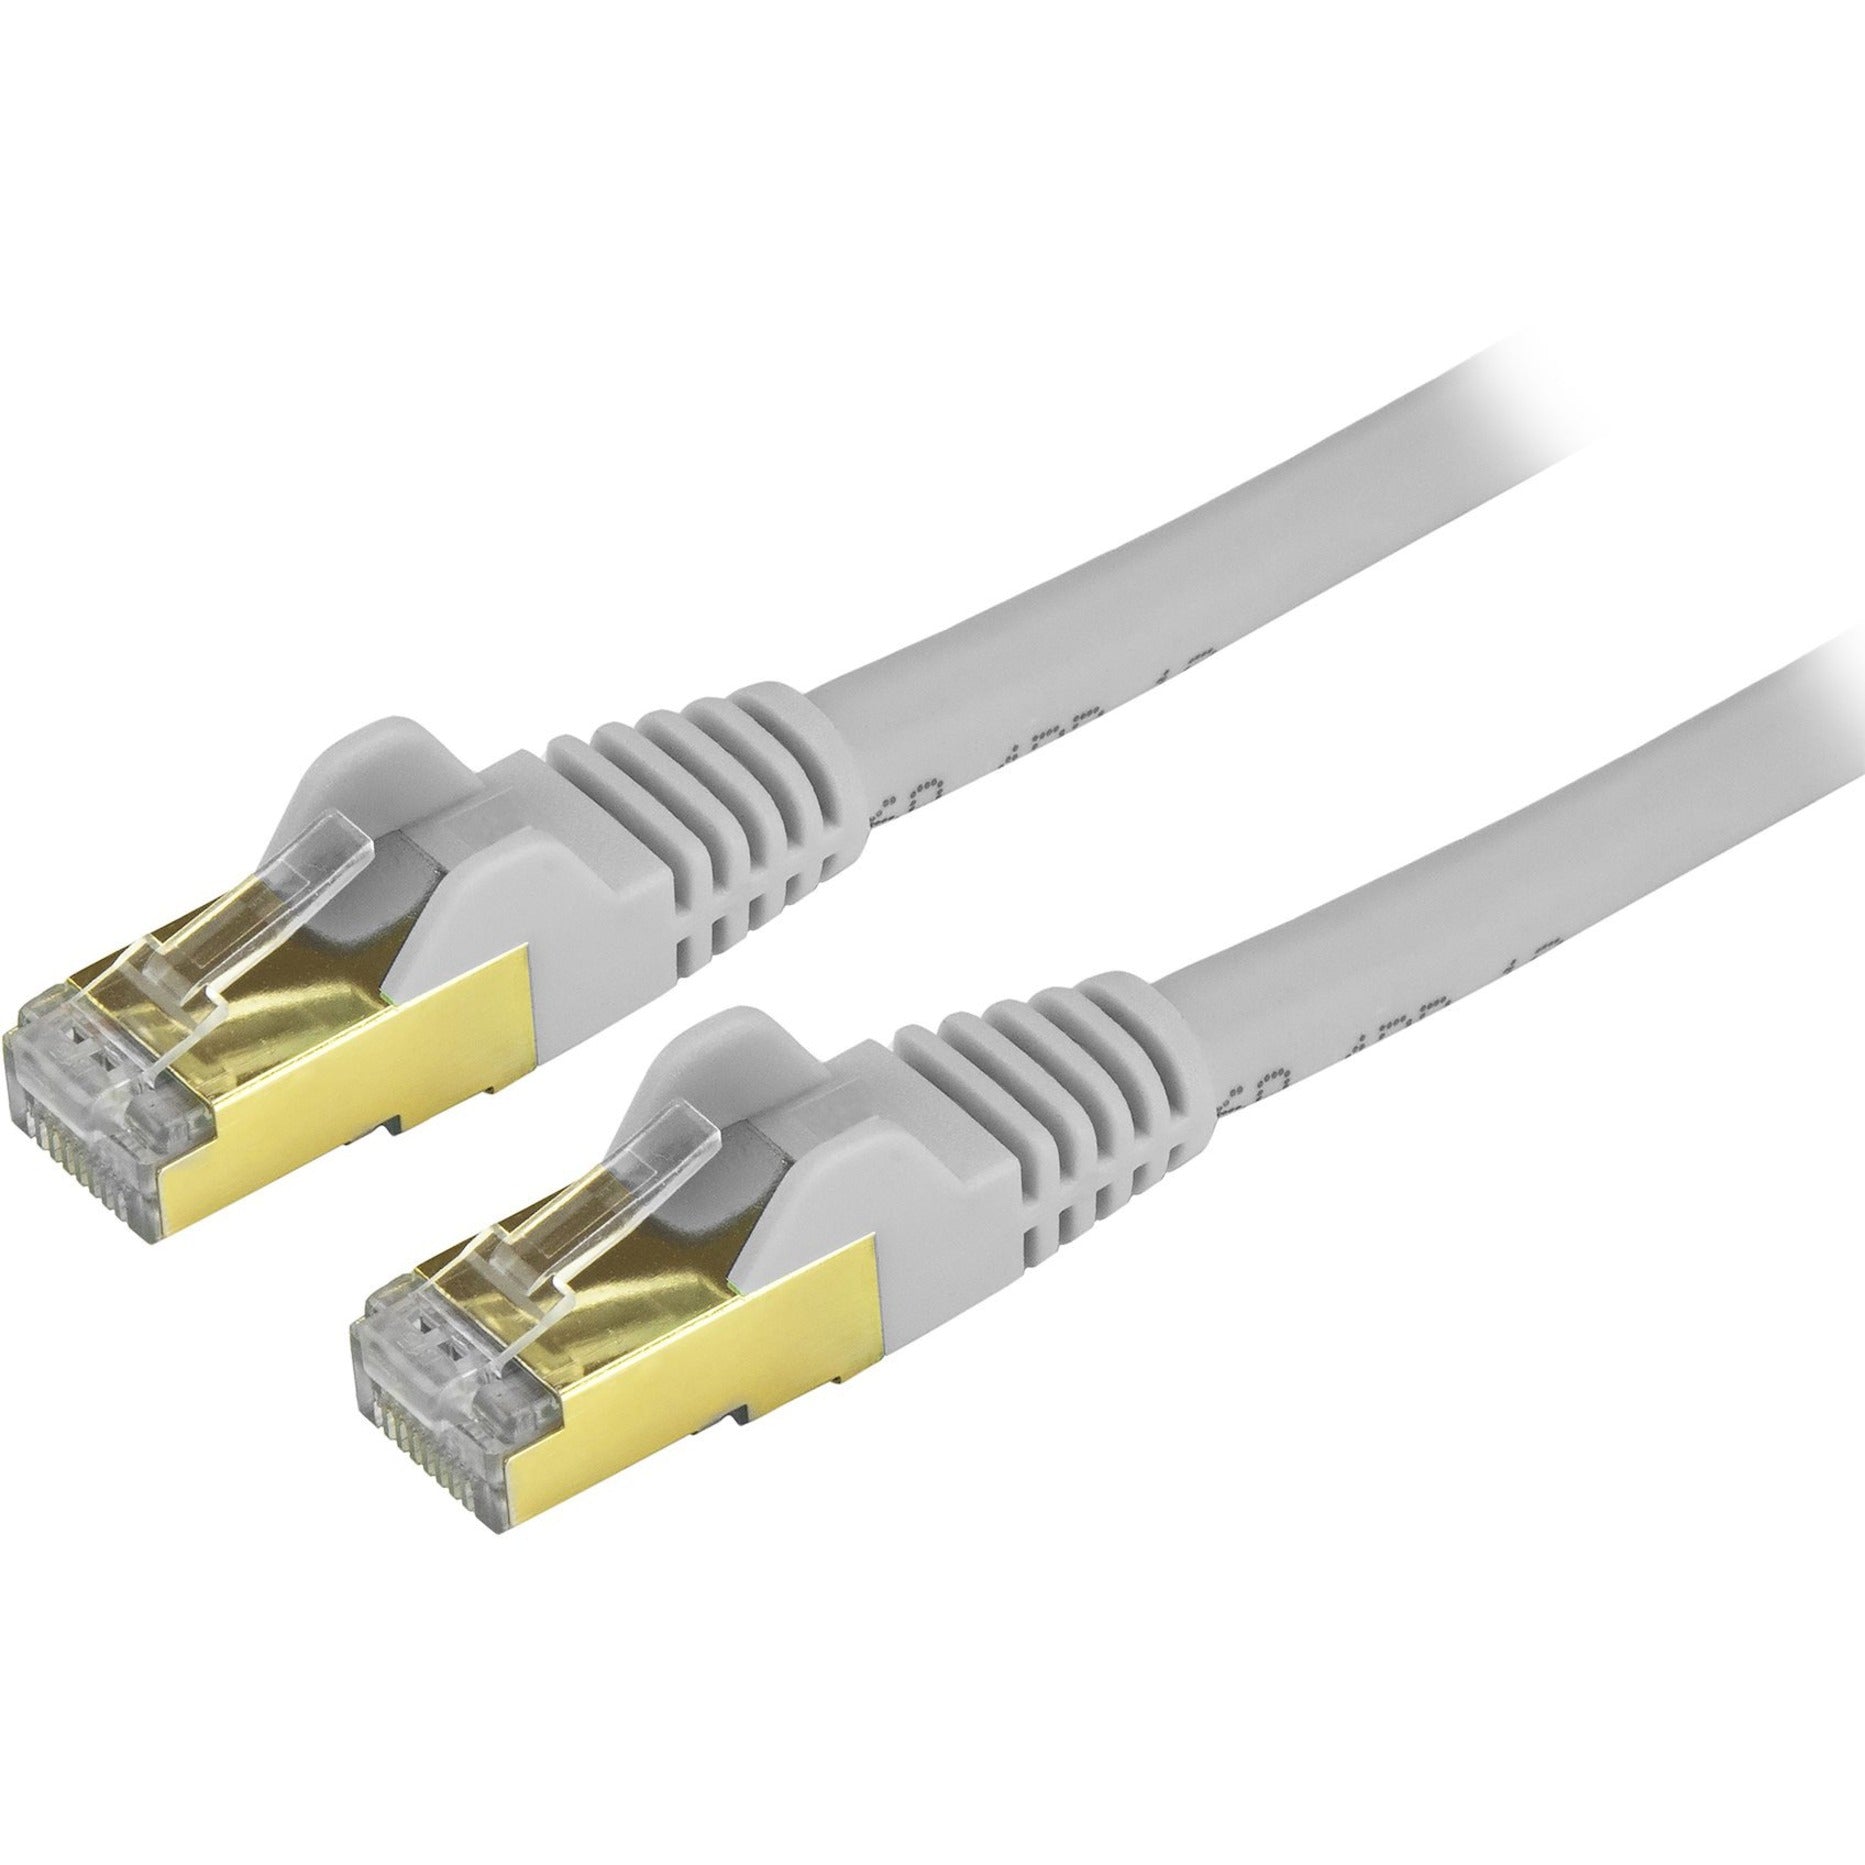 StarTech.com C6ASPAT12GR Cat6a Ethernet Patch Cable - Shielded (STP) - 12 ft., Gray, Snagless RJ45 Ethernet Cord